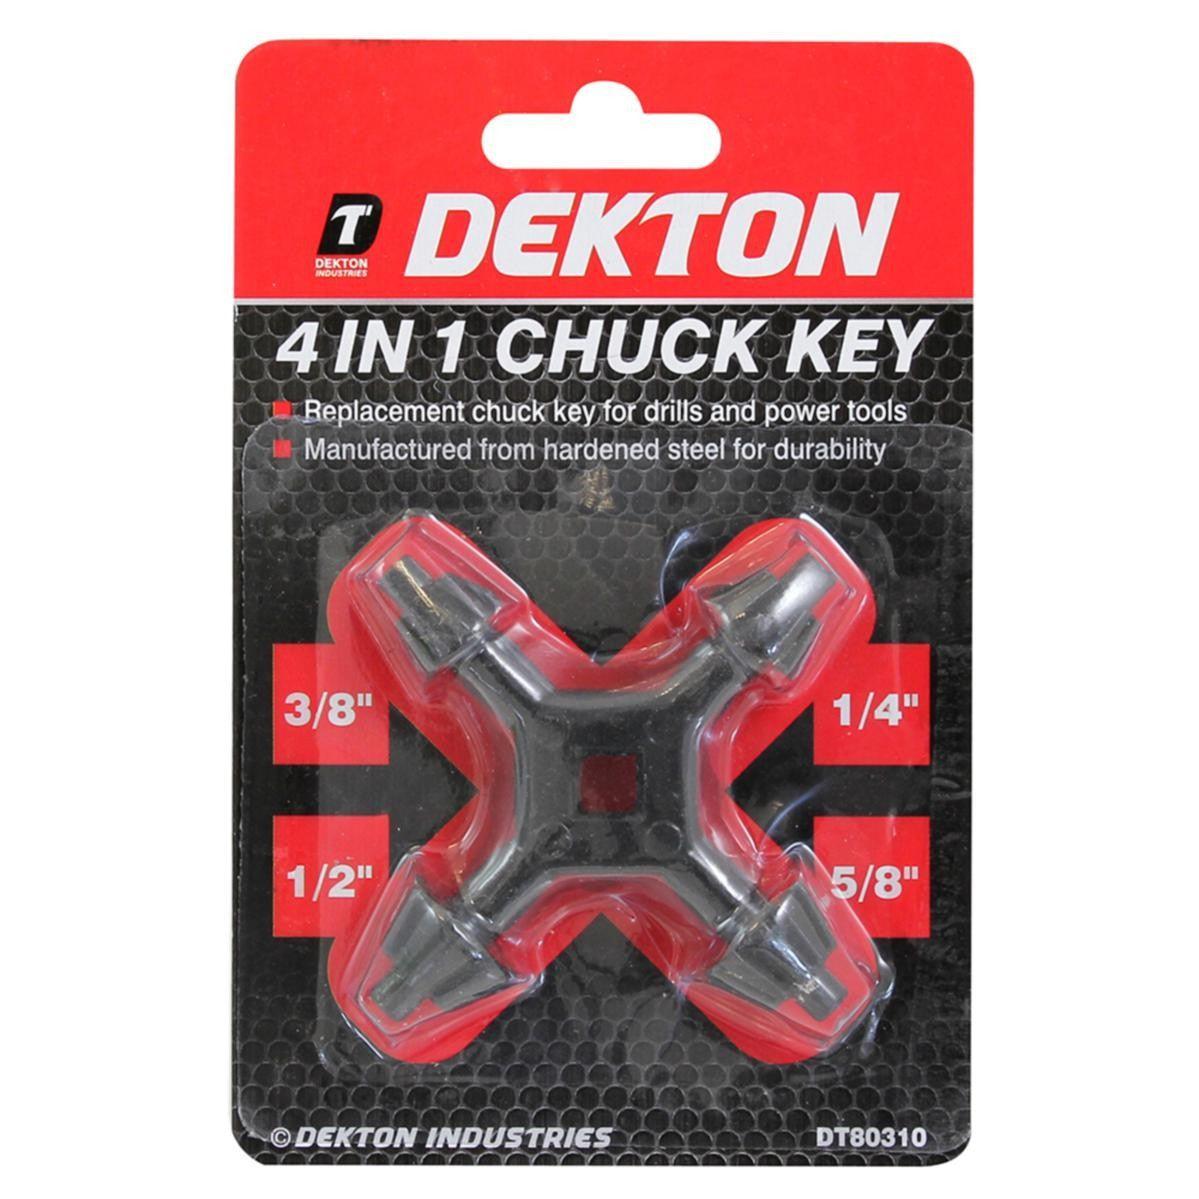 Dekton | 4 In 1 Chuck Key DT80310 - Choice Stores